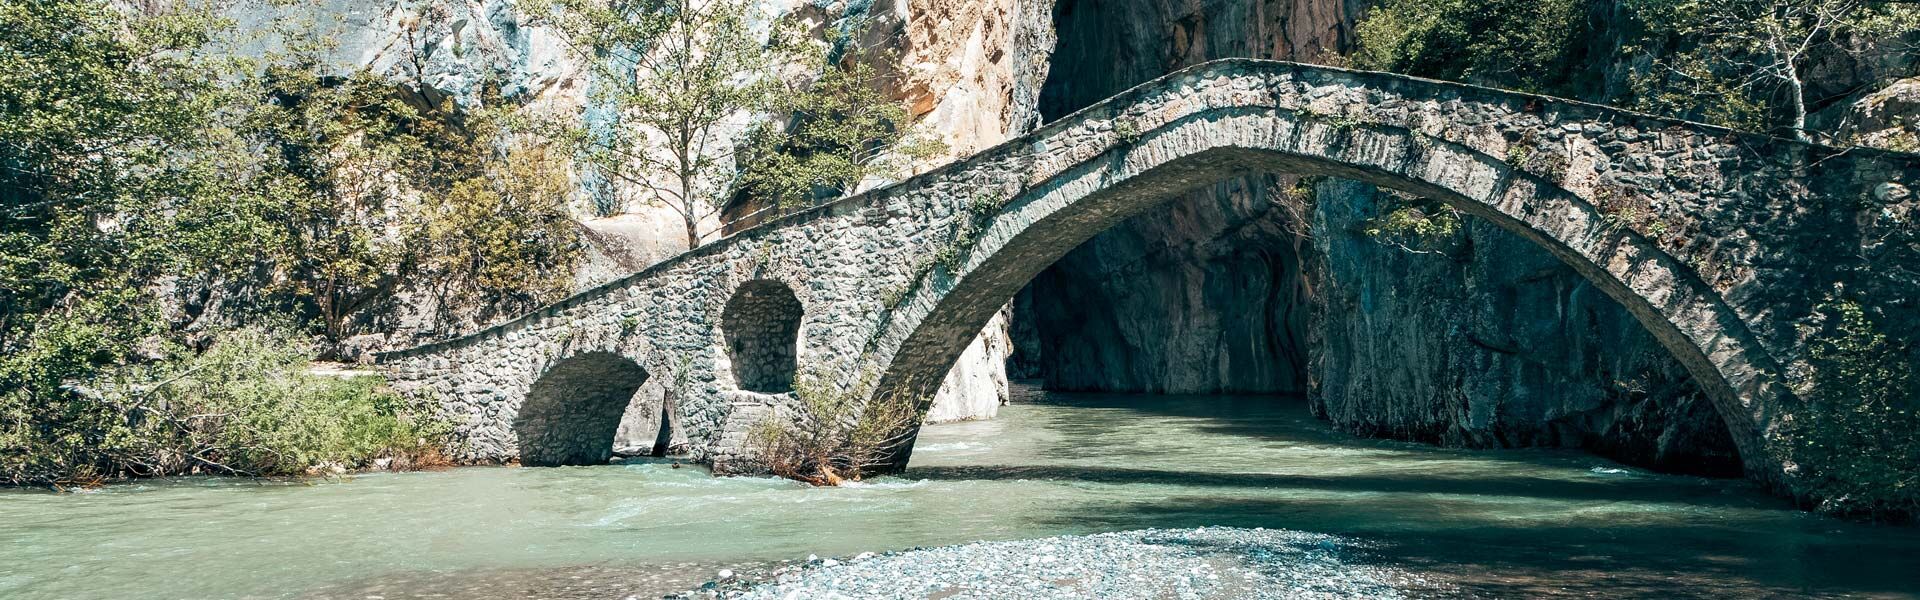 Portitsa gorge and the old stone bridge of Venedictos river near Grevena city